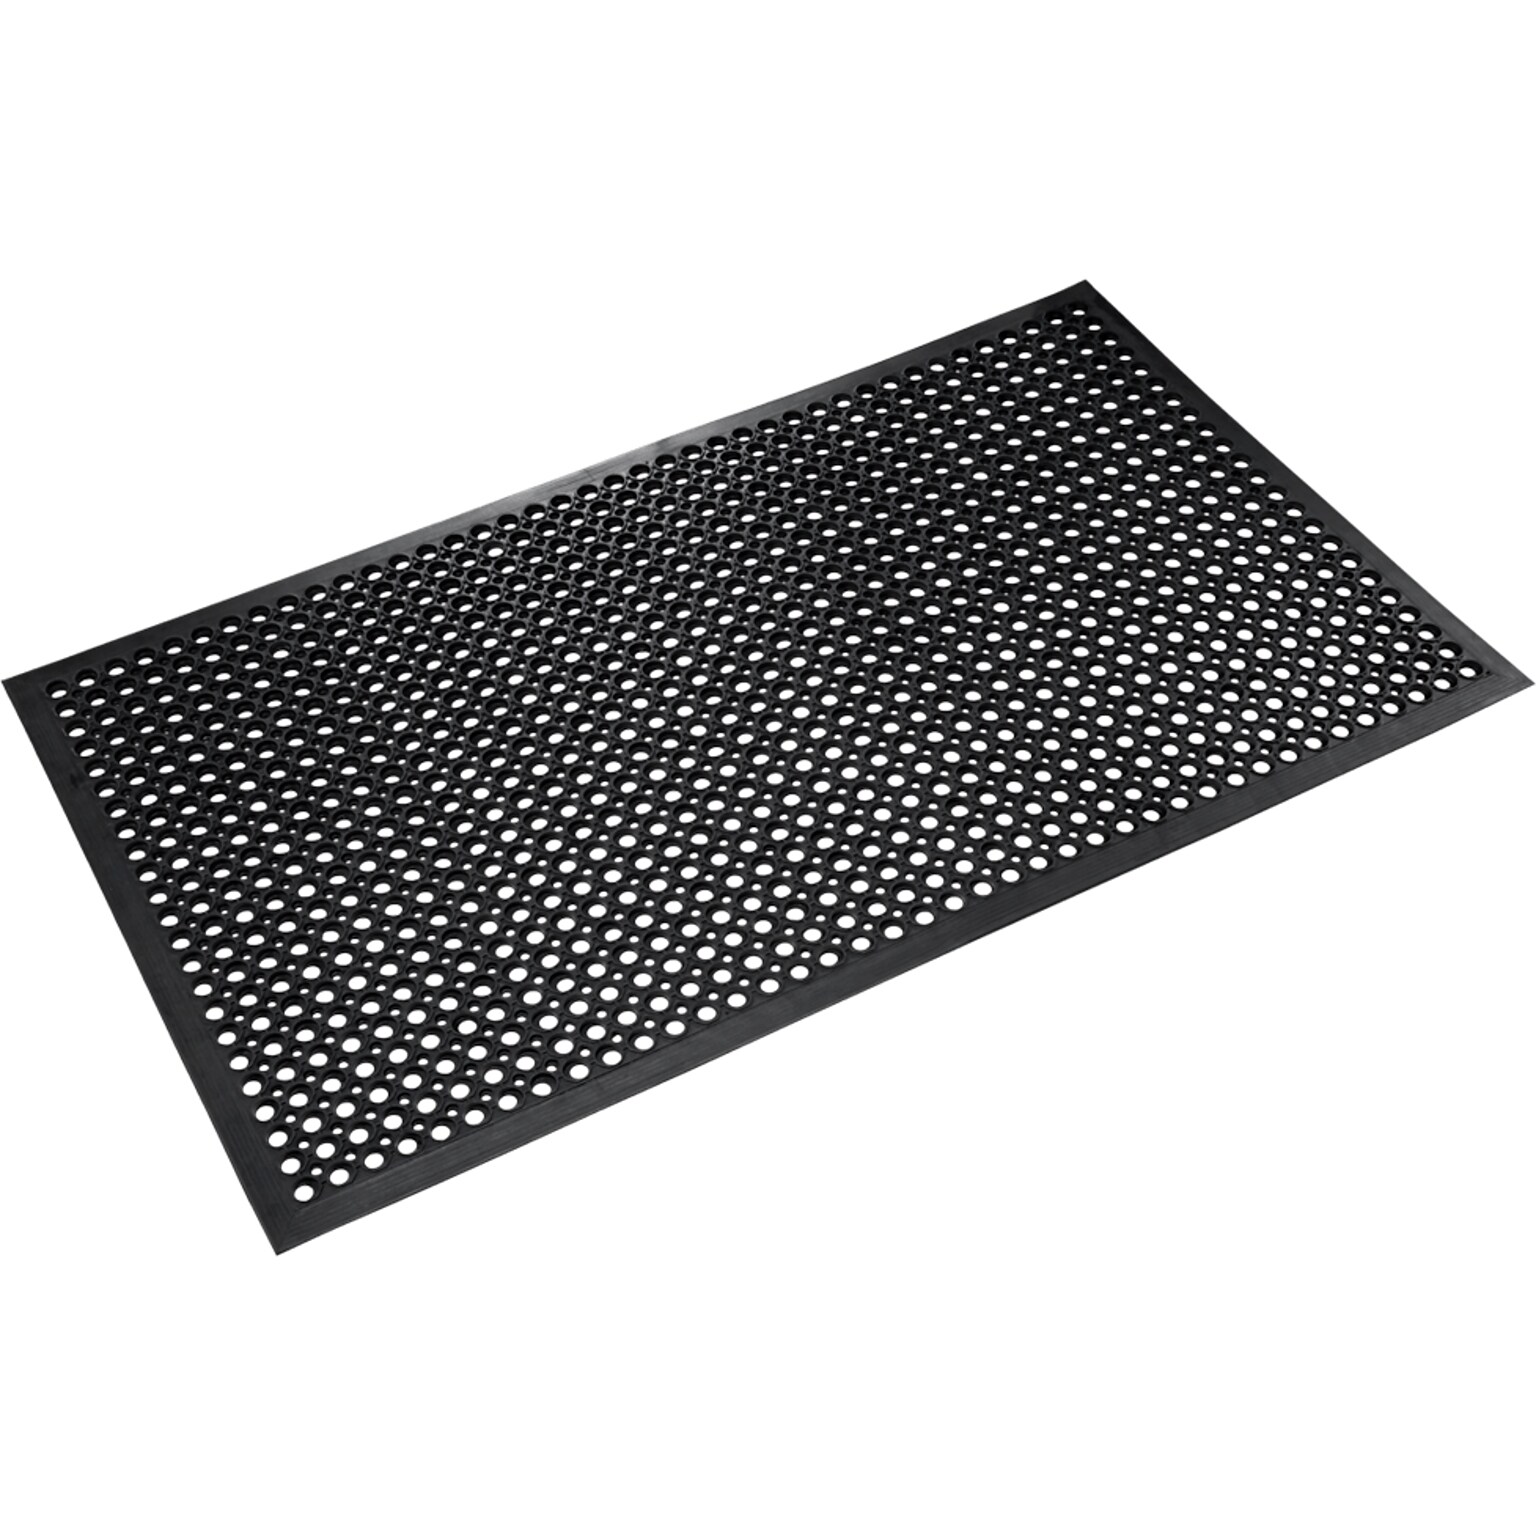 Crown Mats Safewalk Anti-Fatigue Drainage Mat, 36 x 60, Black (WS TF35BK)